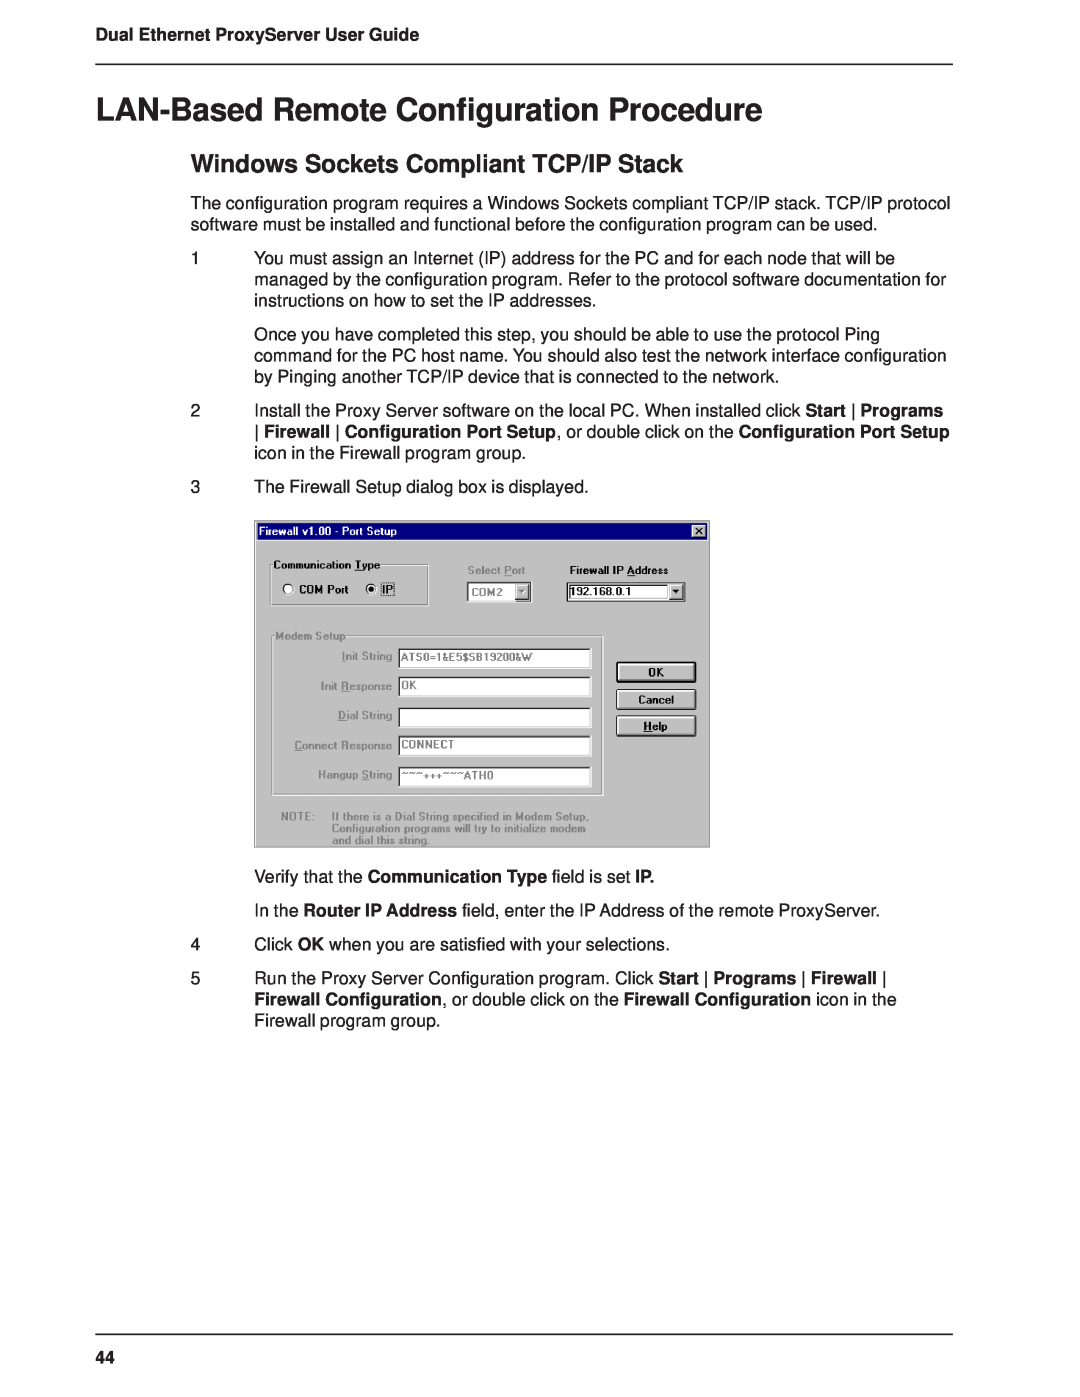 Multitech MTPSR1-120 manual LAN-Based Remote Configuration Procedure, Windows Sockets Compliant TCP/IP Stack 